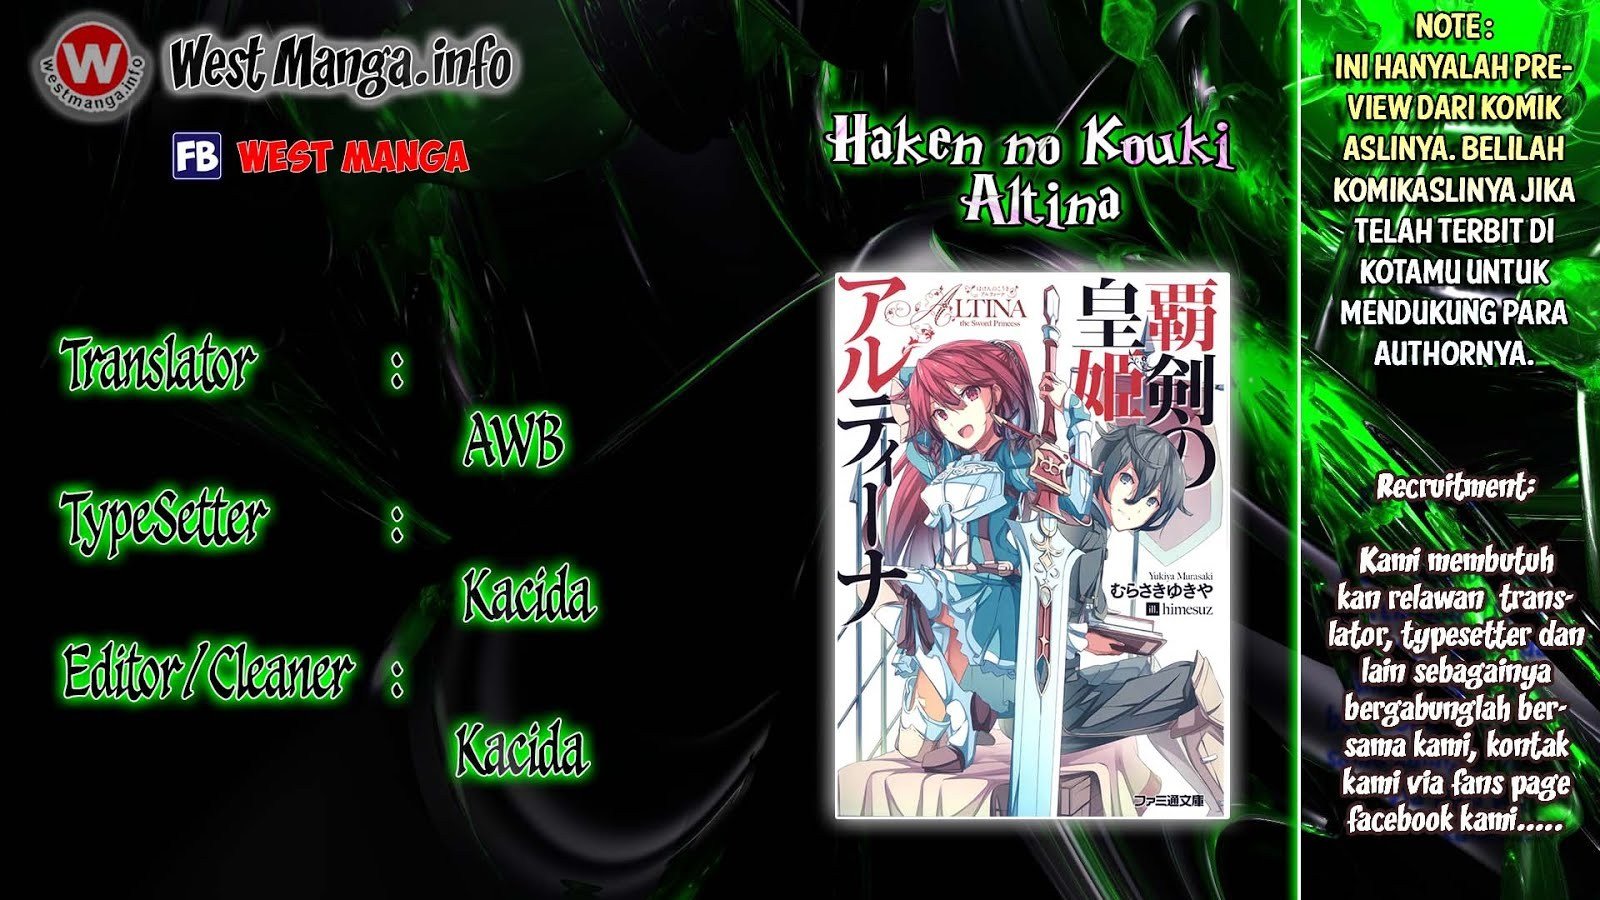 Haken no Kouki Altina Chapter 02